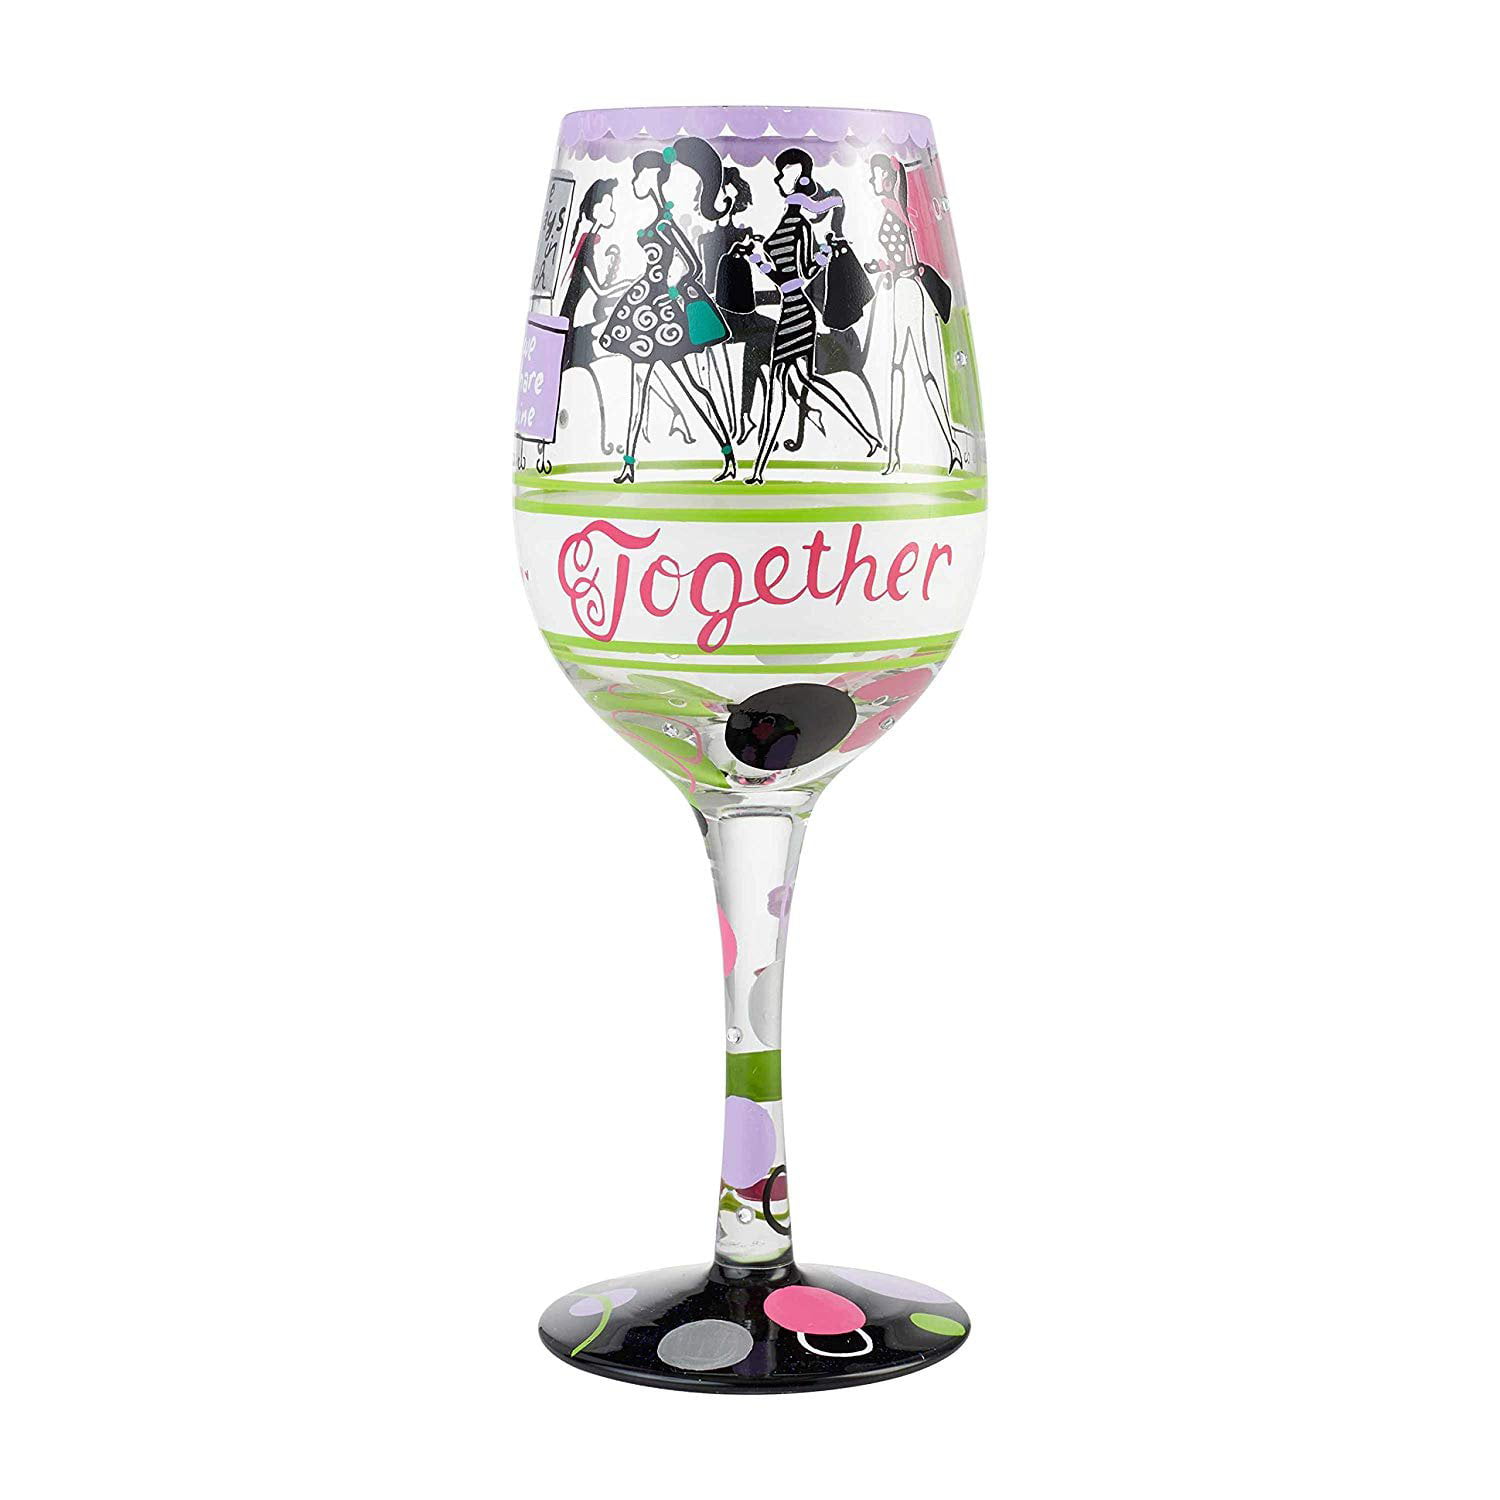 Designs by Lolita “Girlfriends Forever” Hand-painted Artisan Wine Glass Enesco GLS11-5533Z 15 oz 